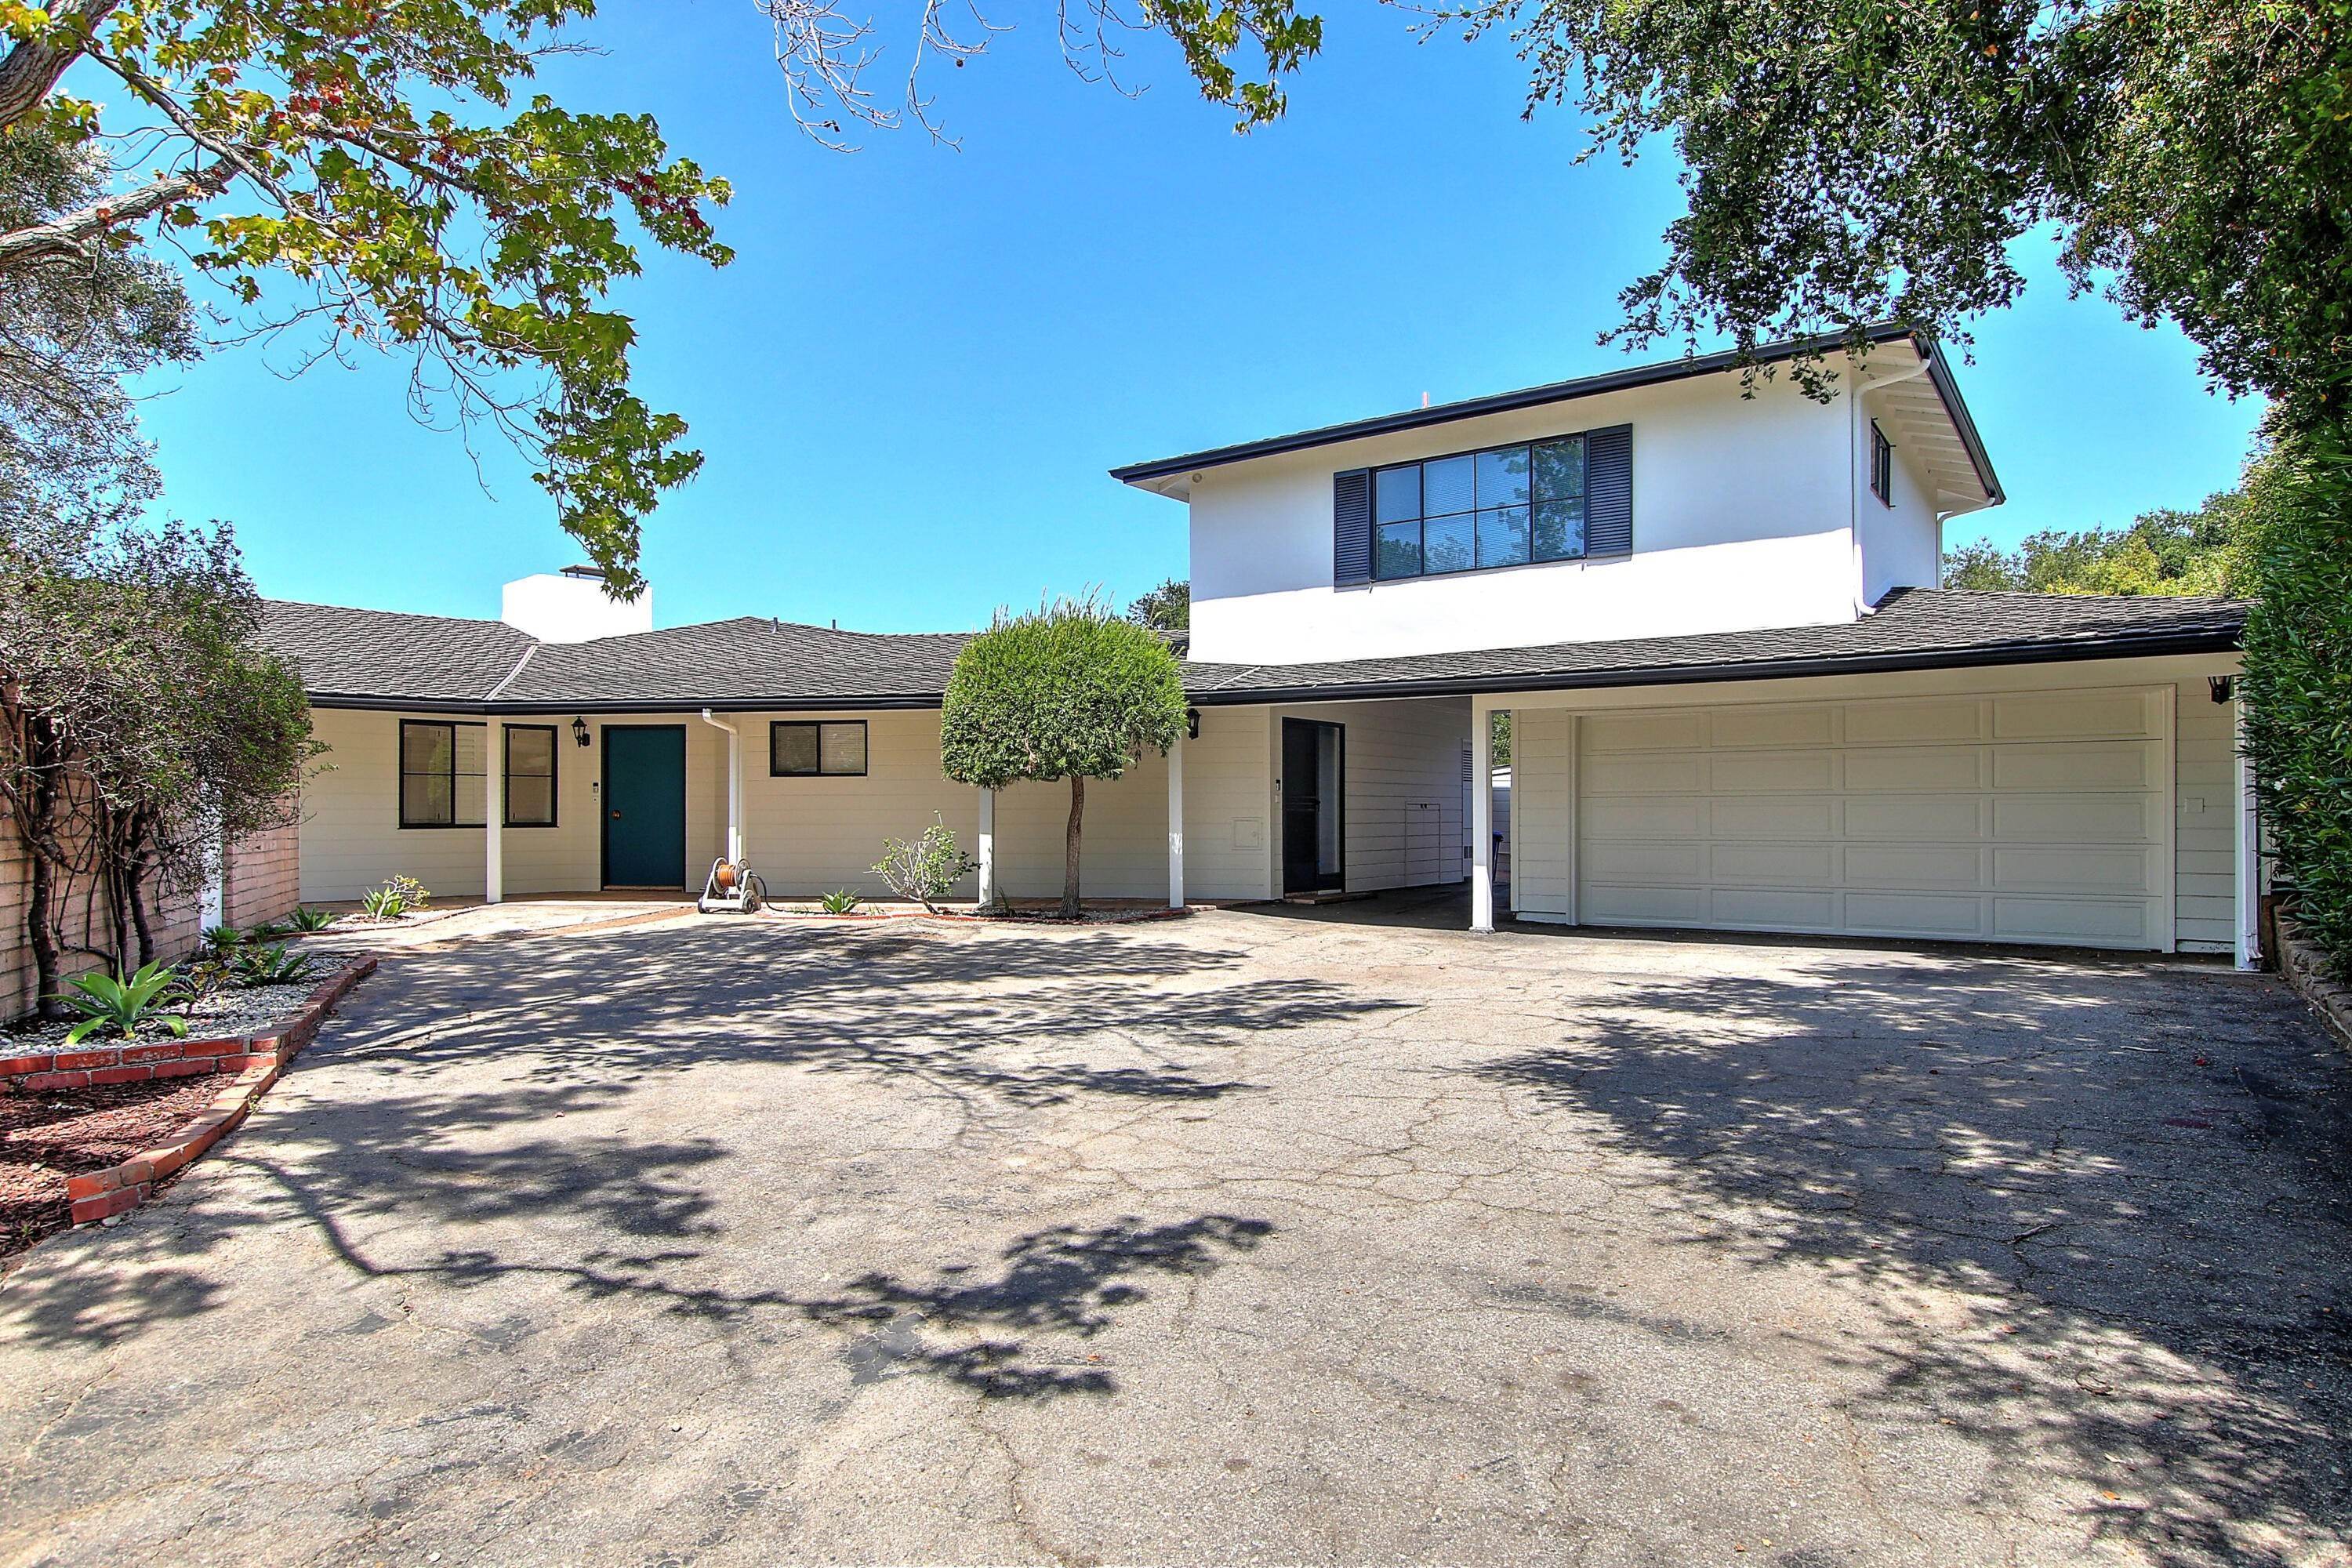 4. Estate at 3318 Calle Fresno Santa Barbara, California 93105 United States